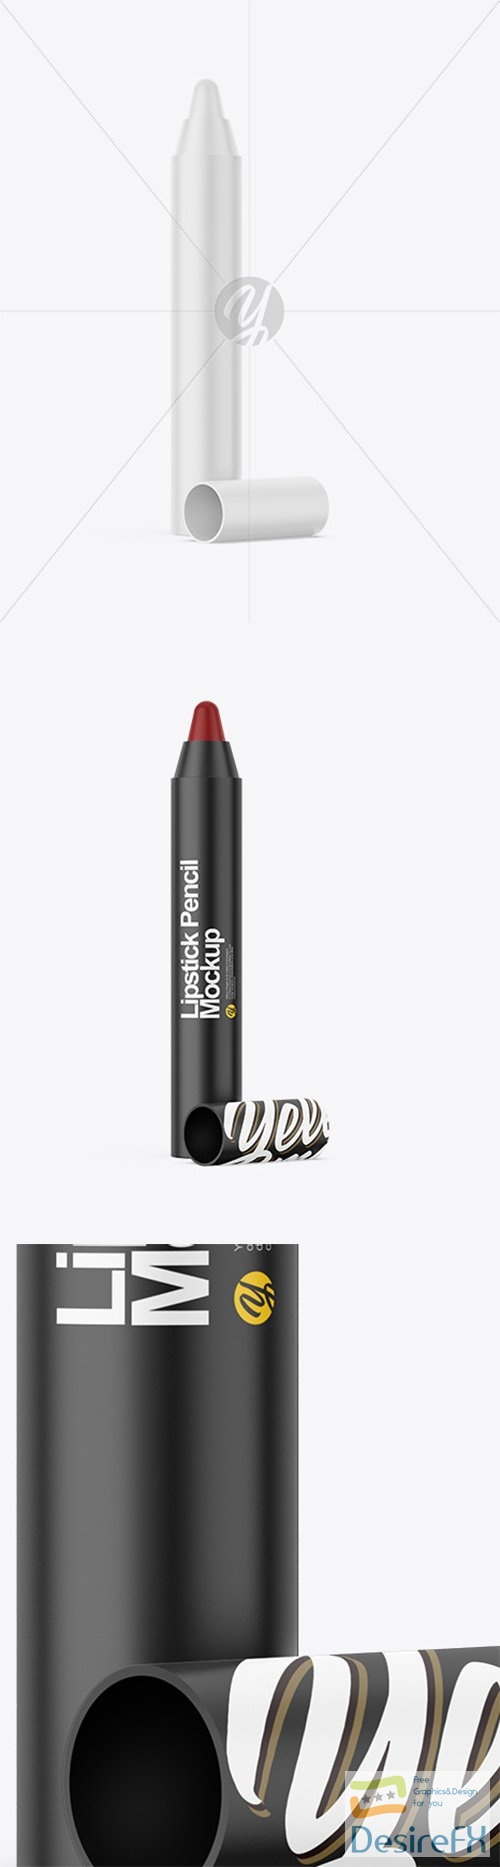 Matte Lipstick Pencil Mockup 82138 TIF